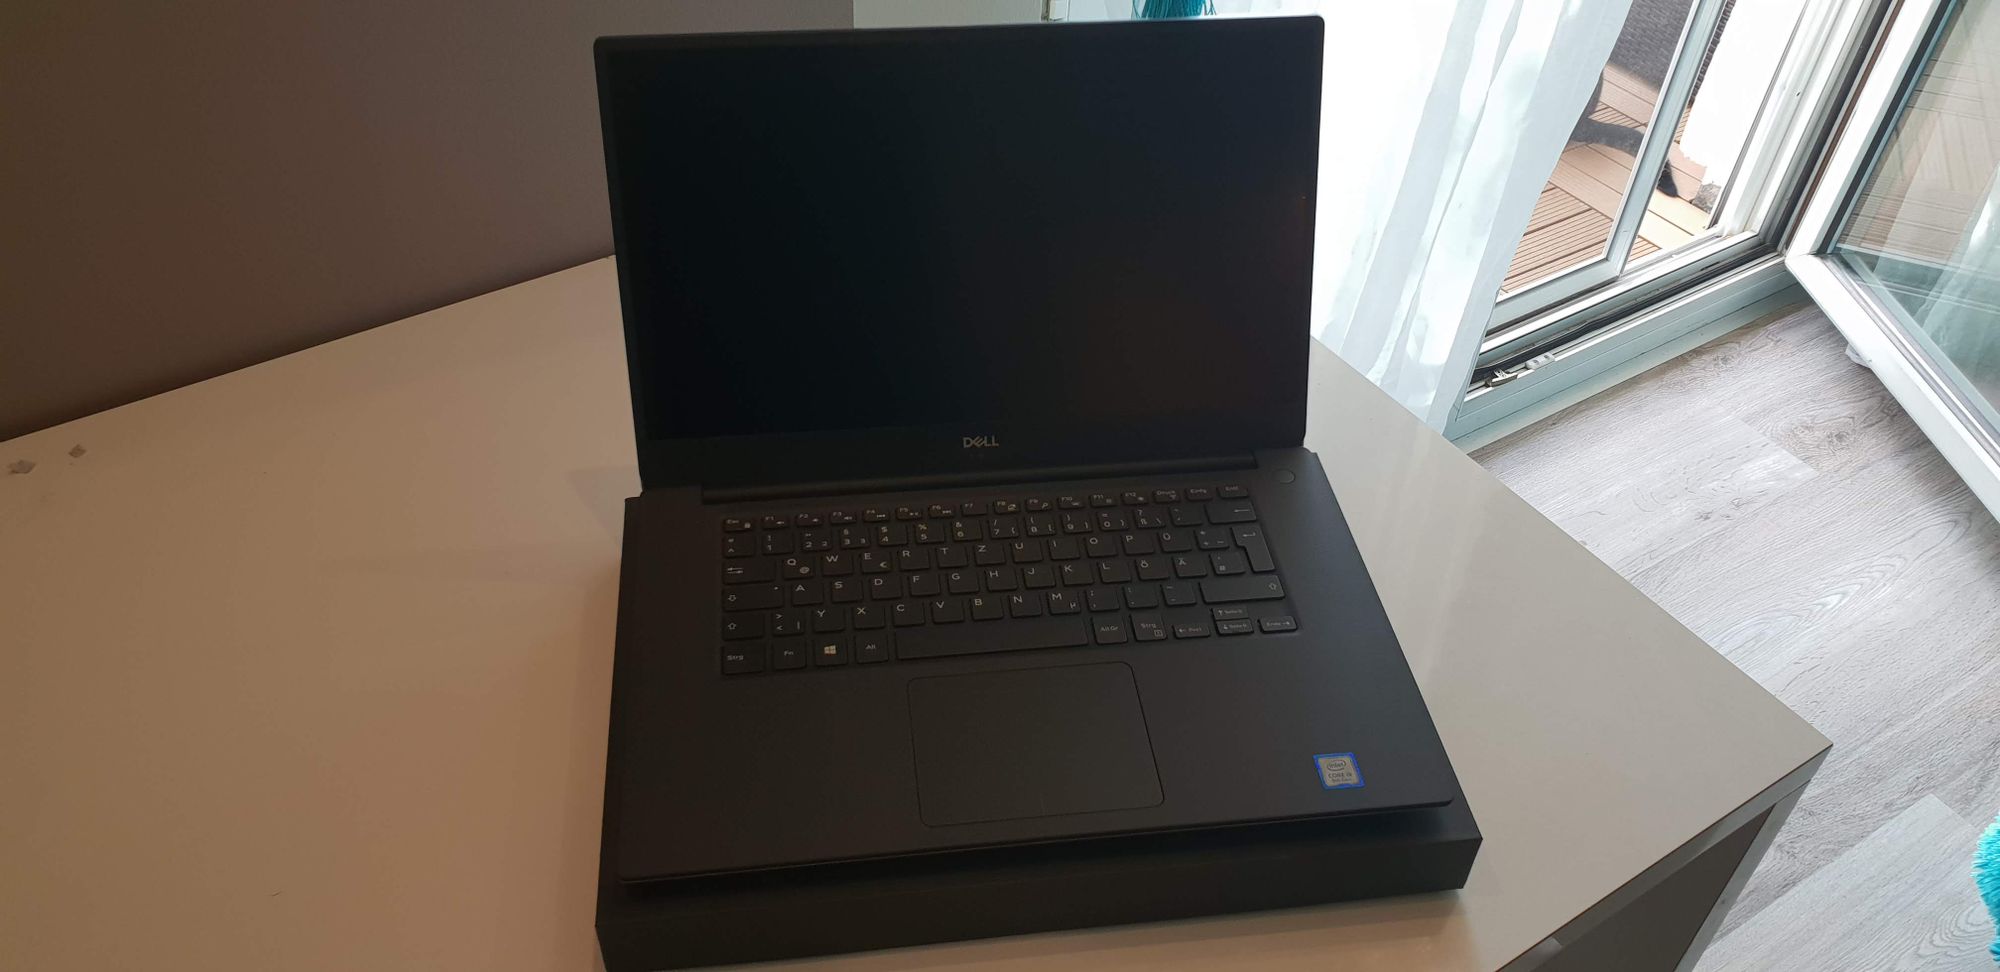 Dell XPS 15 9570 i9 2018 - Developer review